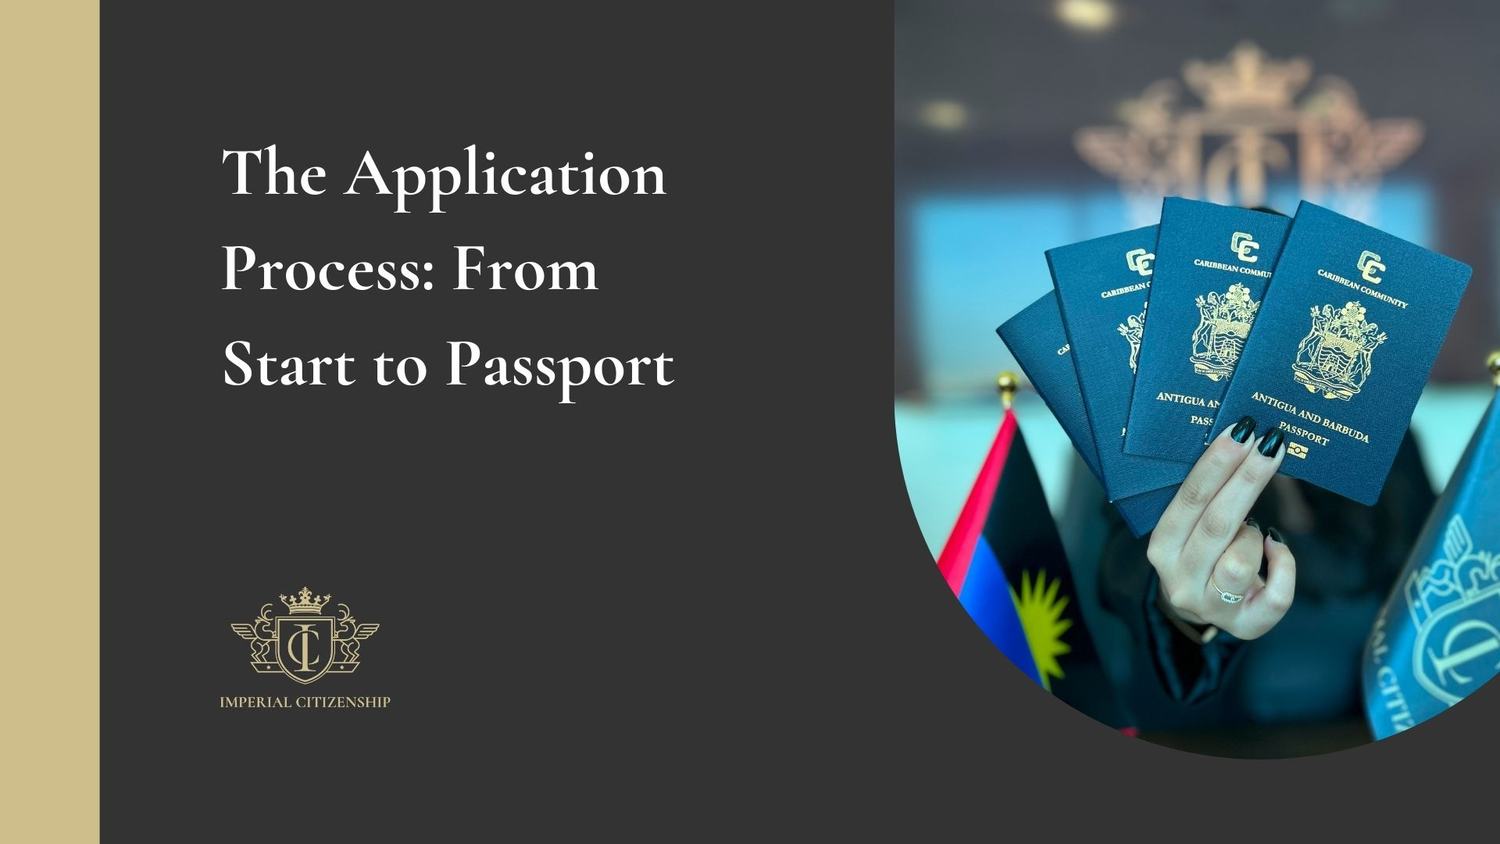 The application process for Barbuda passport